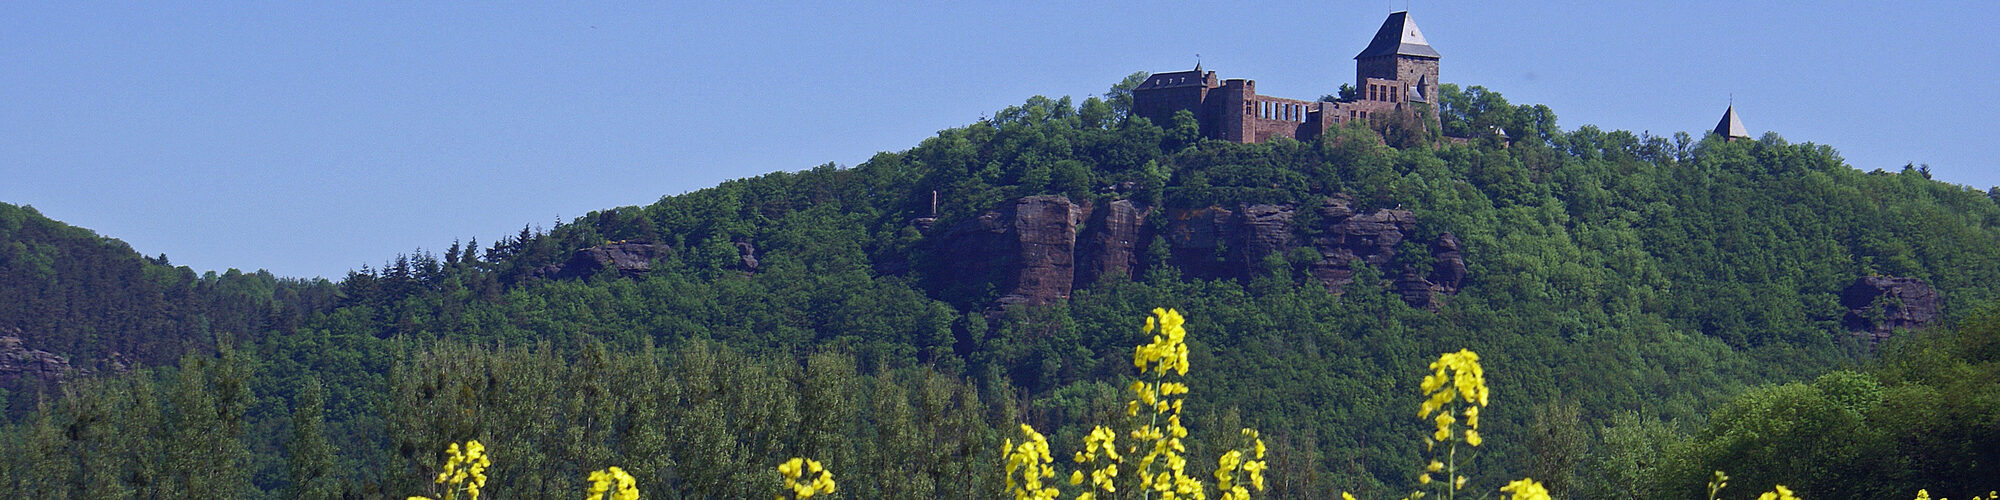 3.Burg Nideggen blühendes Rapsfeld